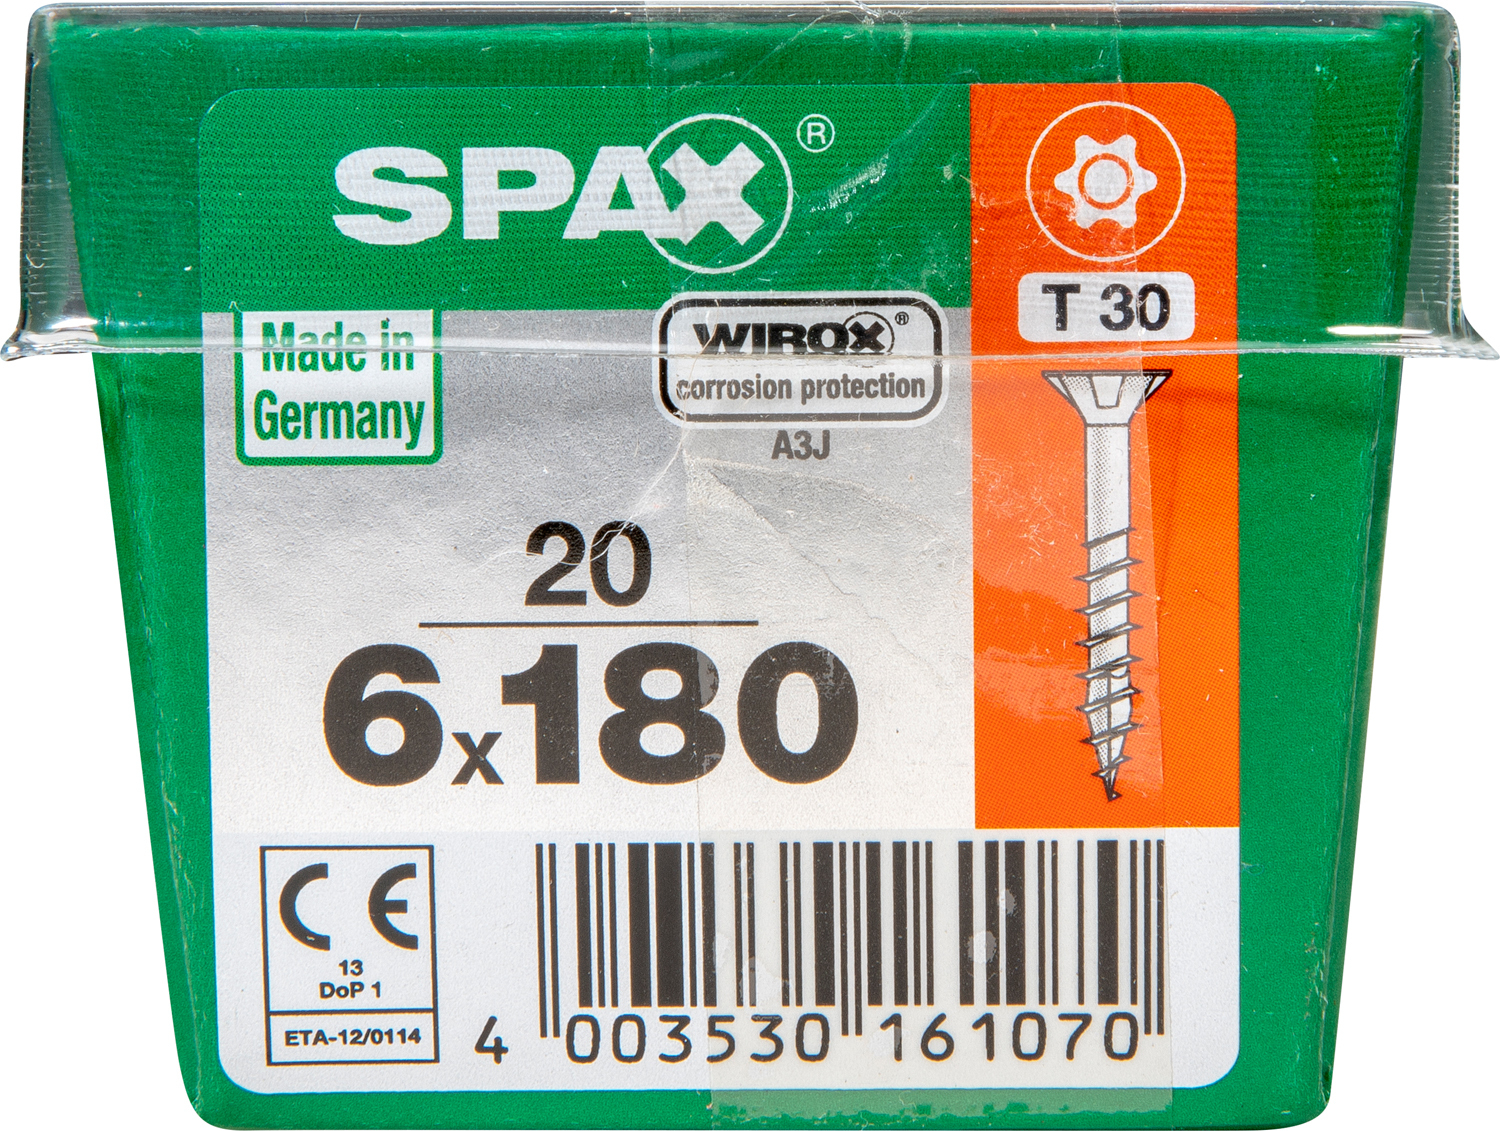 SPAX INTERNATIONAL GMBH & CO. KG - ENNEP Universalschrauben WIROX A3J TG 6x180 mm SeKo T-Star Plus Pack L STK (20 Stück)